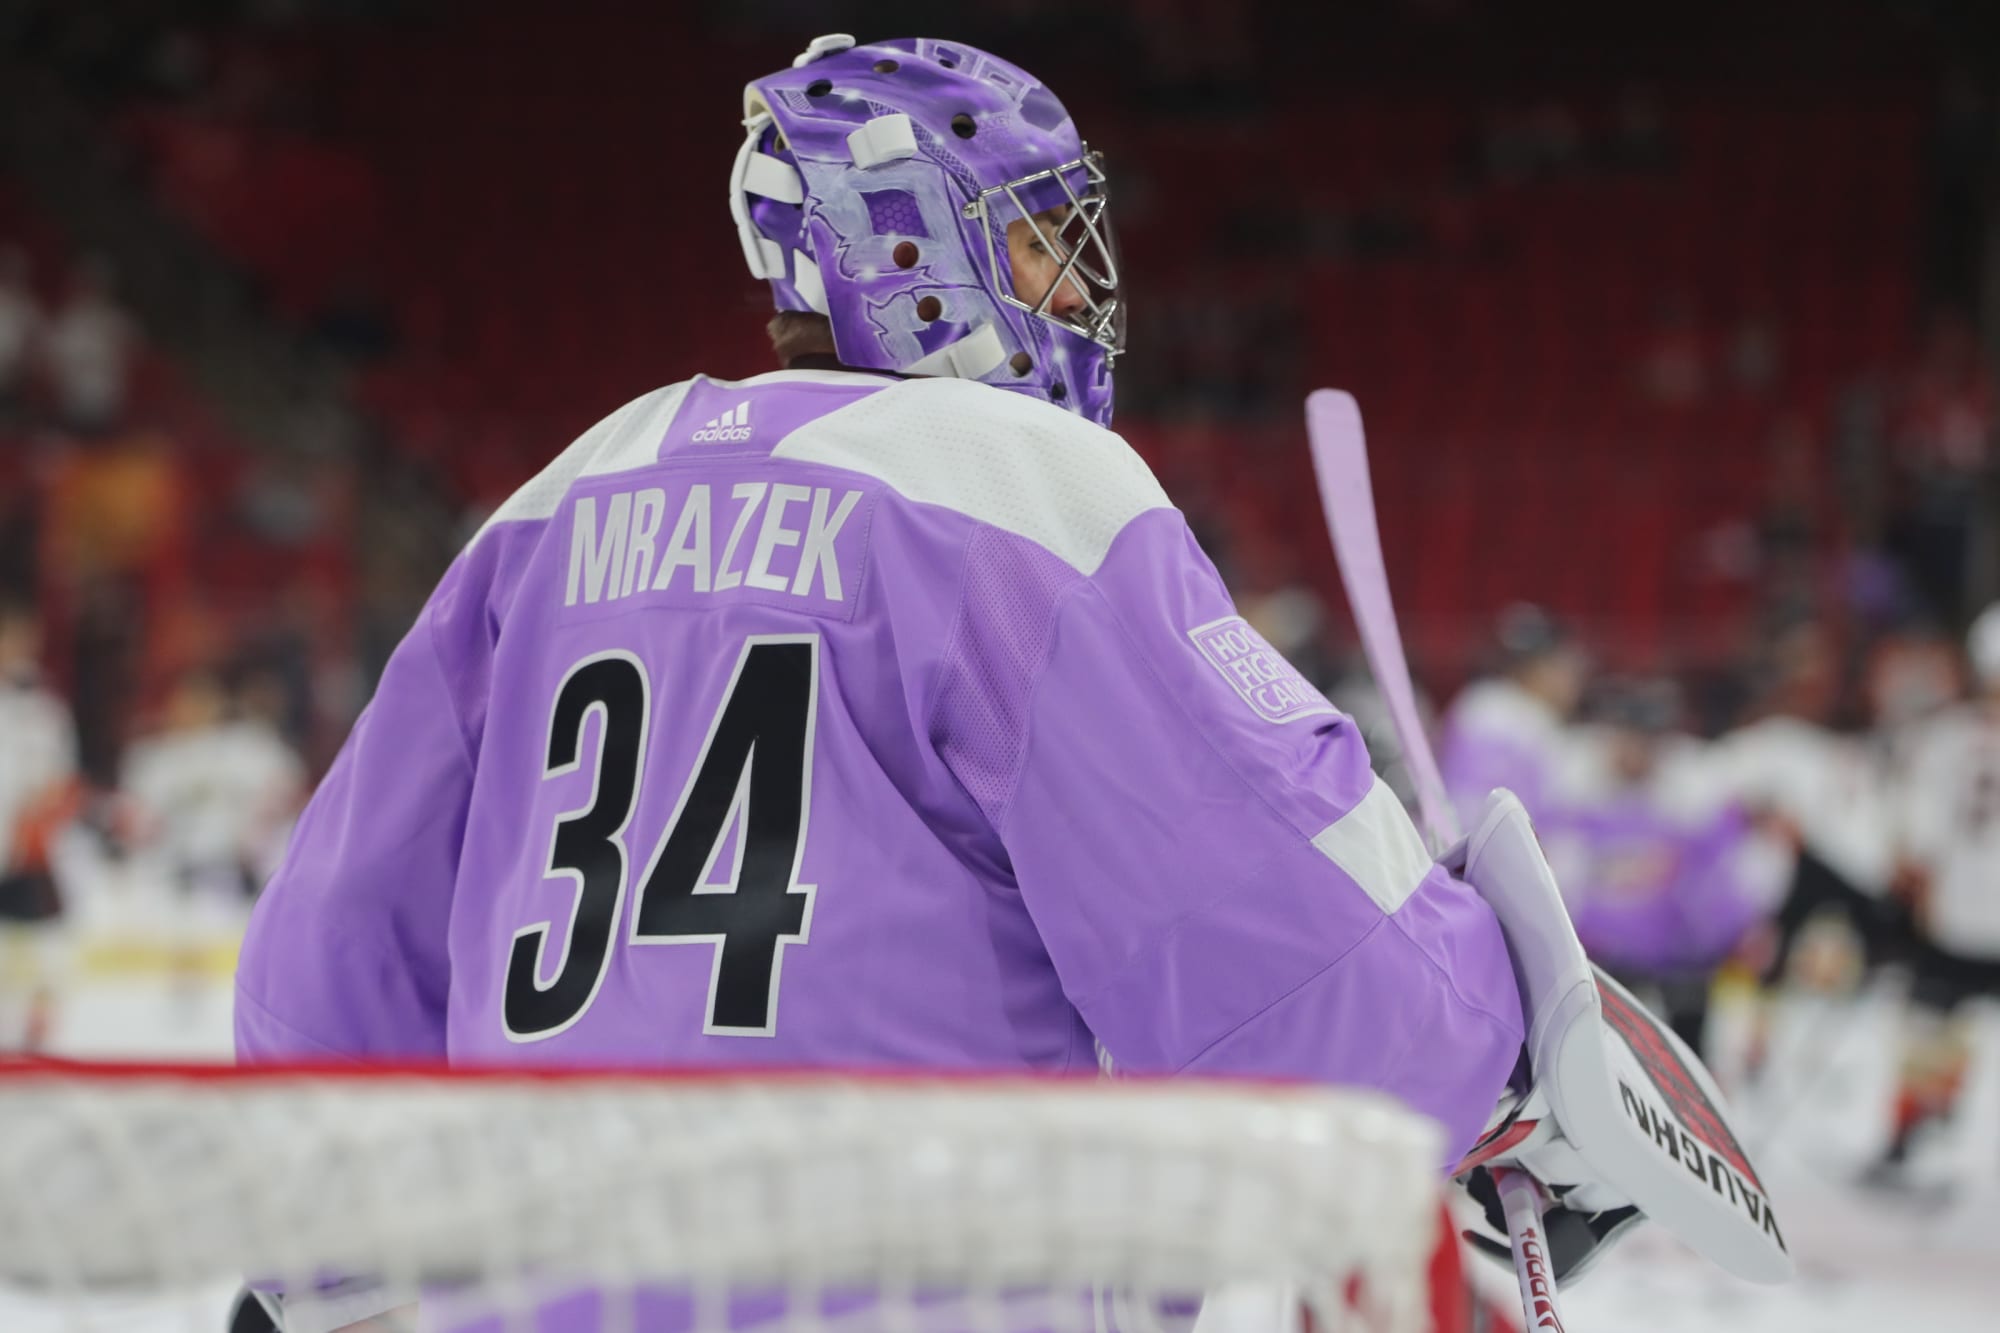 NHL Fights Cancer Apparel, Hockey Fights Cancer Jerseys